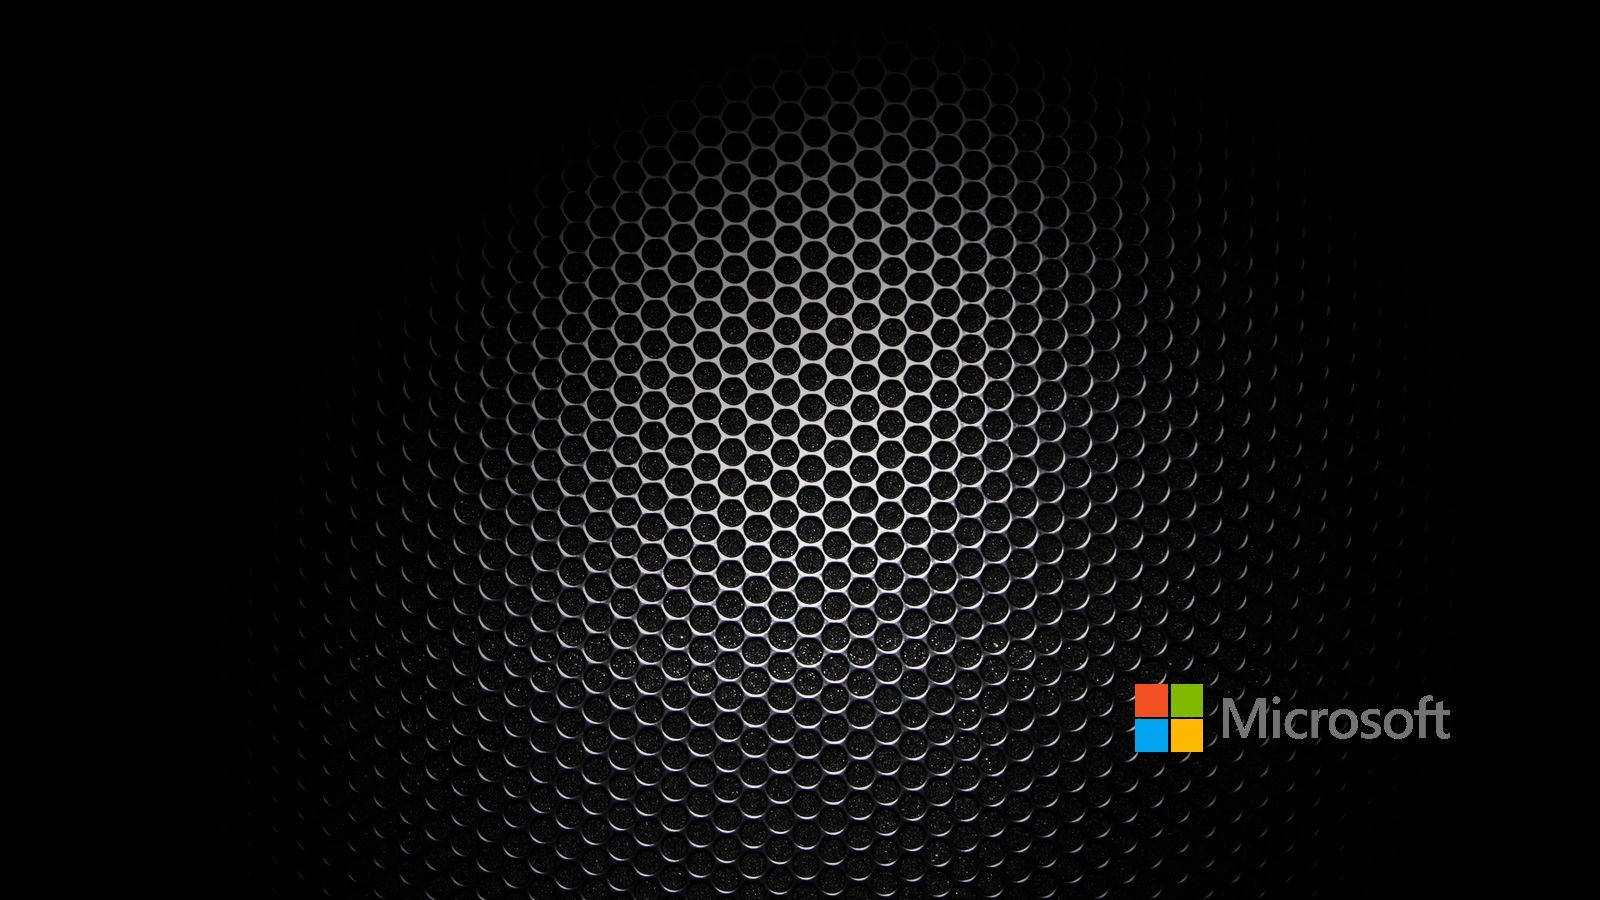 Microsoft Honeycomb Metal Mesh | Innovative Technology Wallpaper